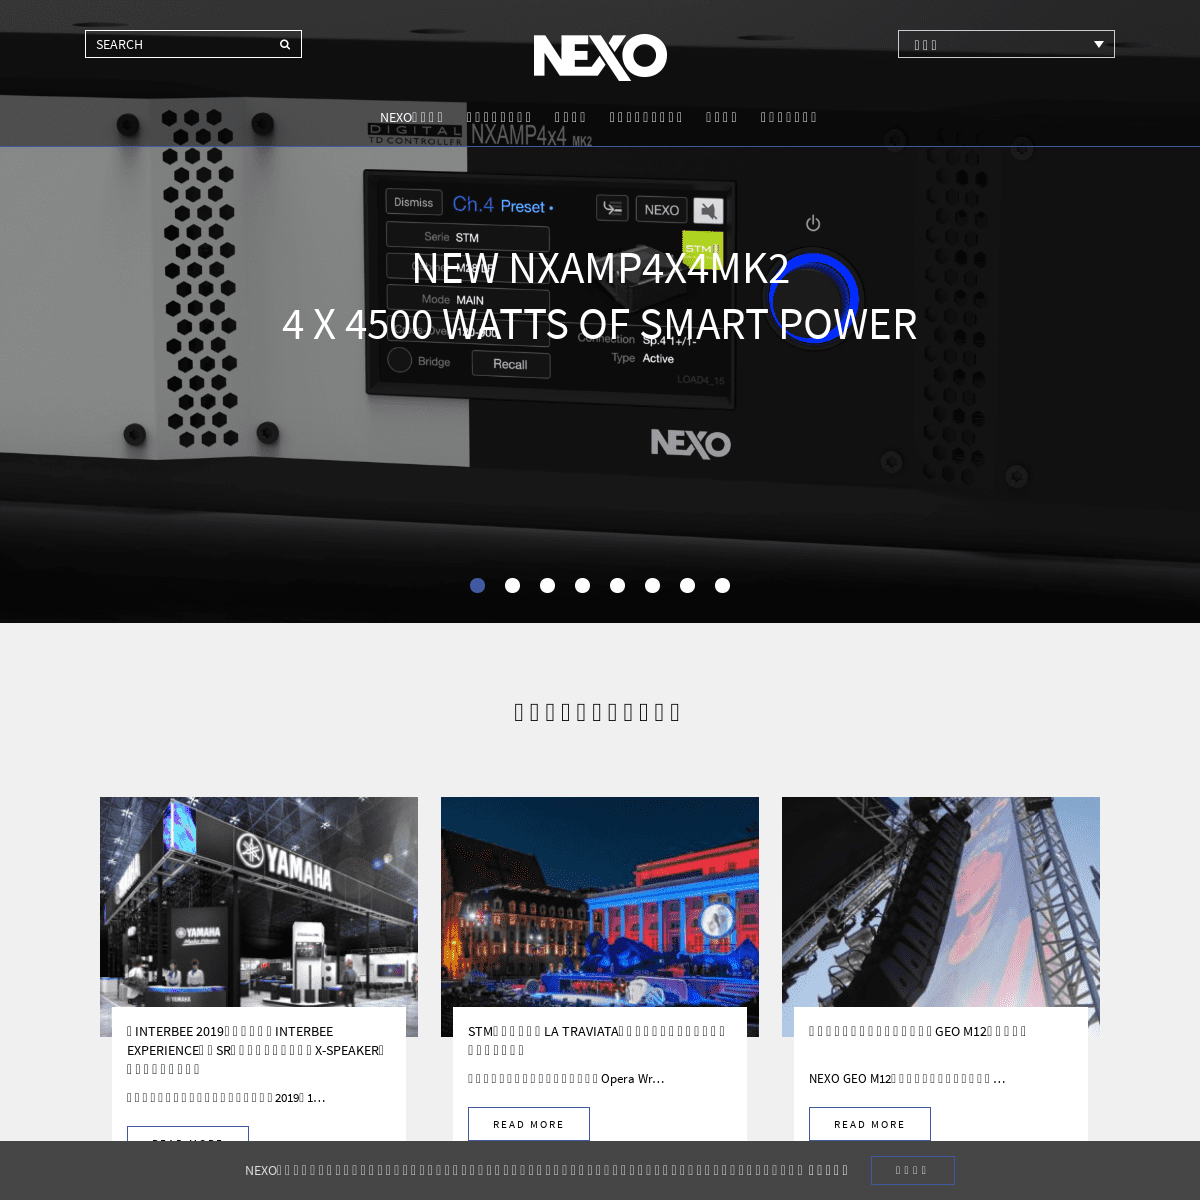 A complete backup of nexo-japan.com